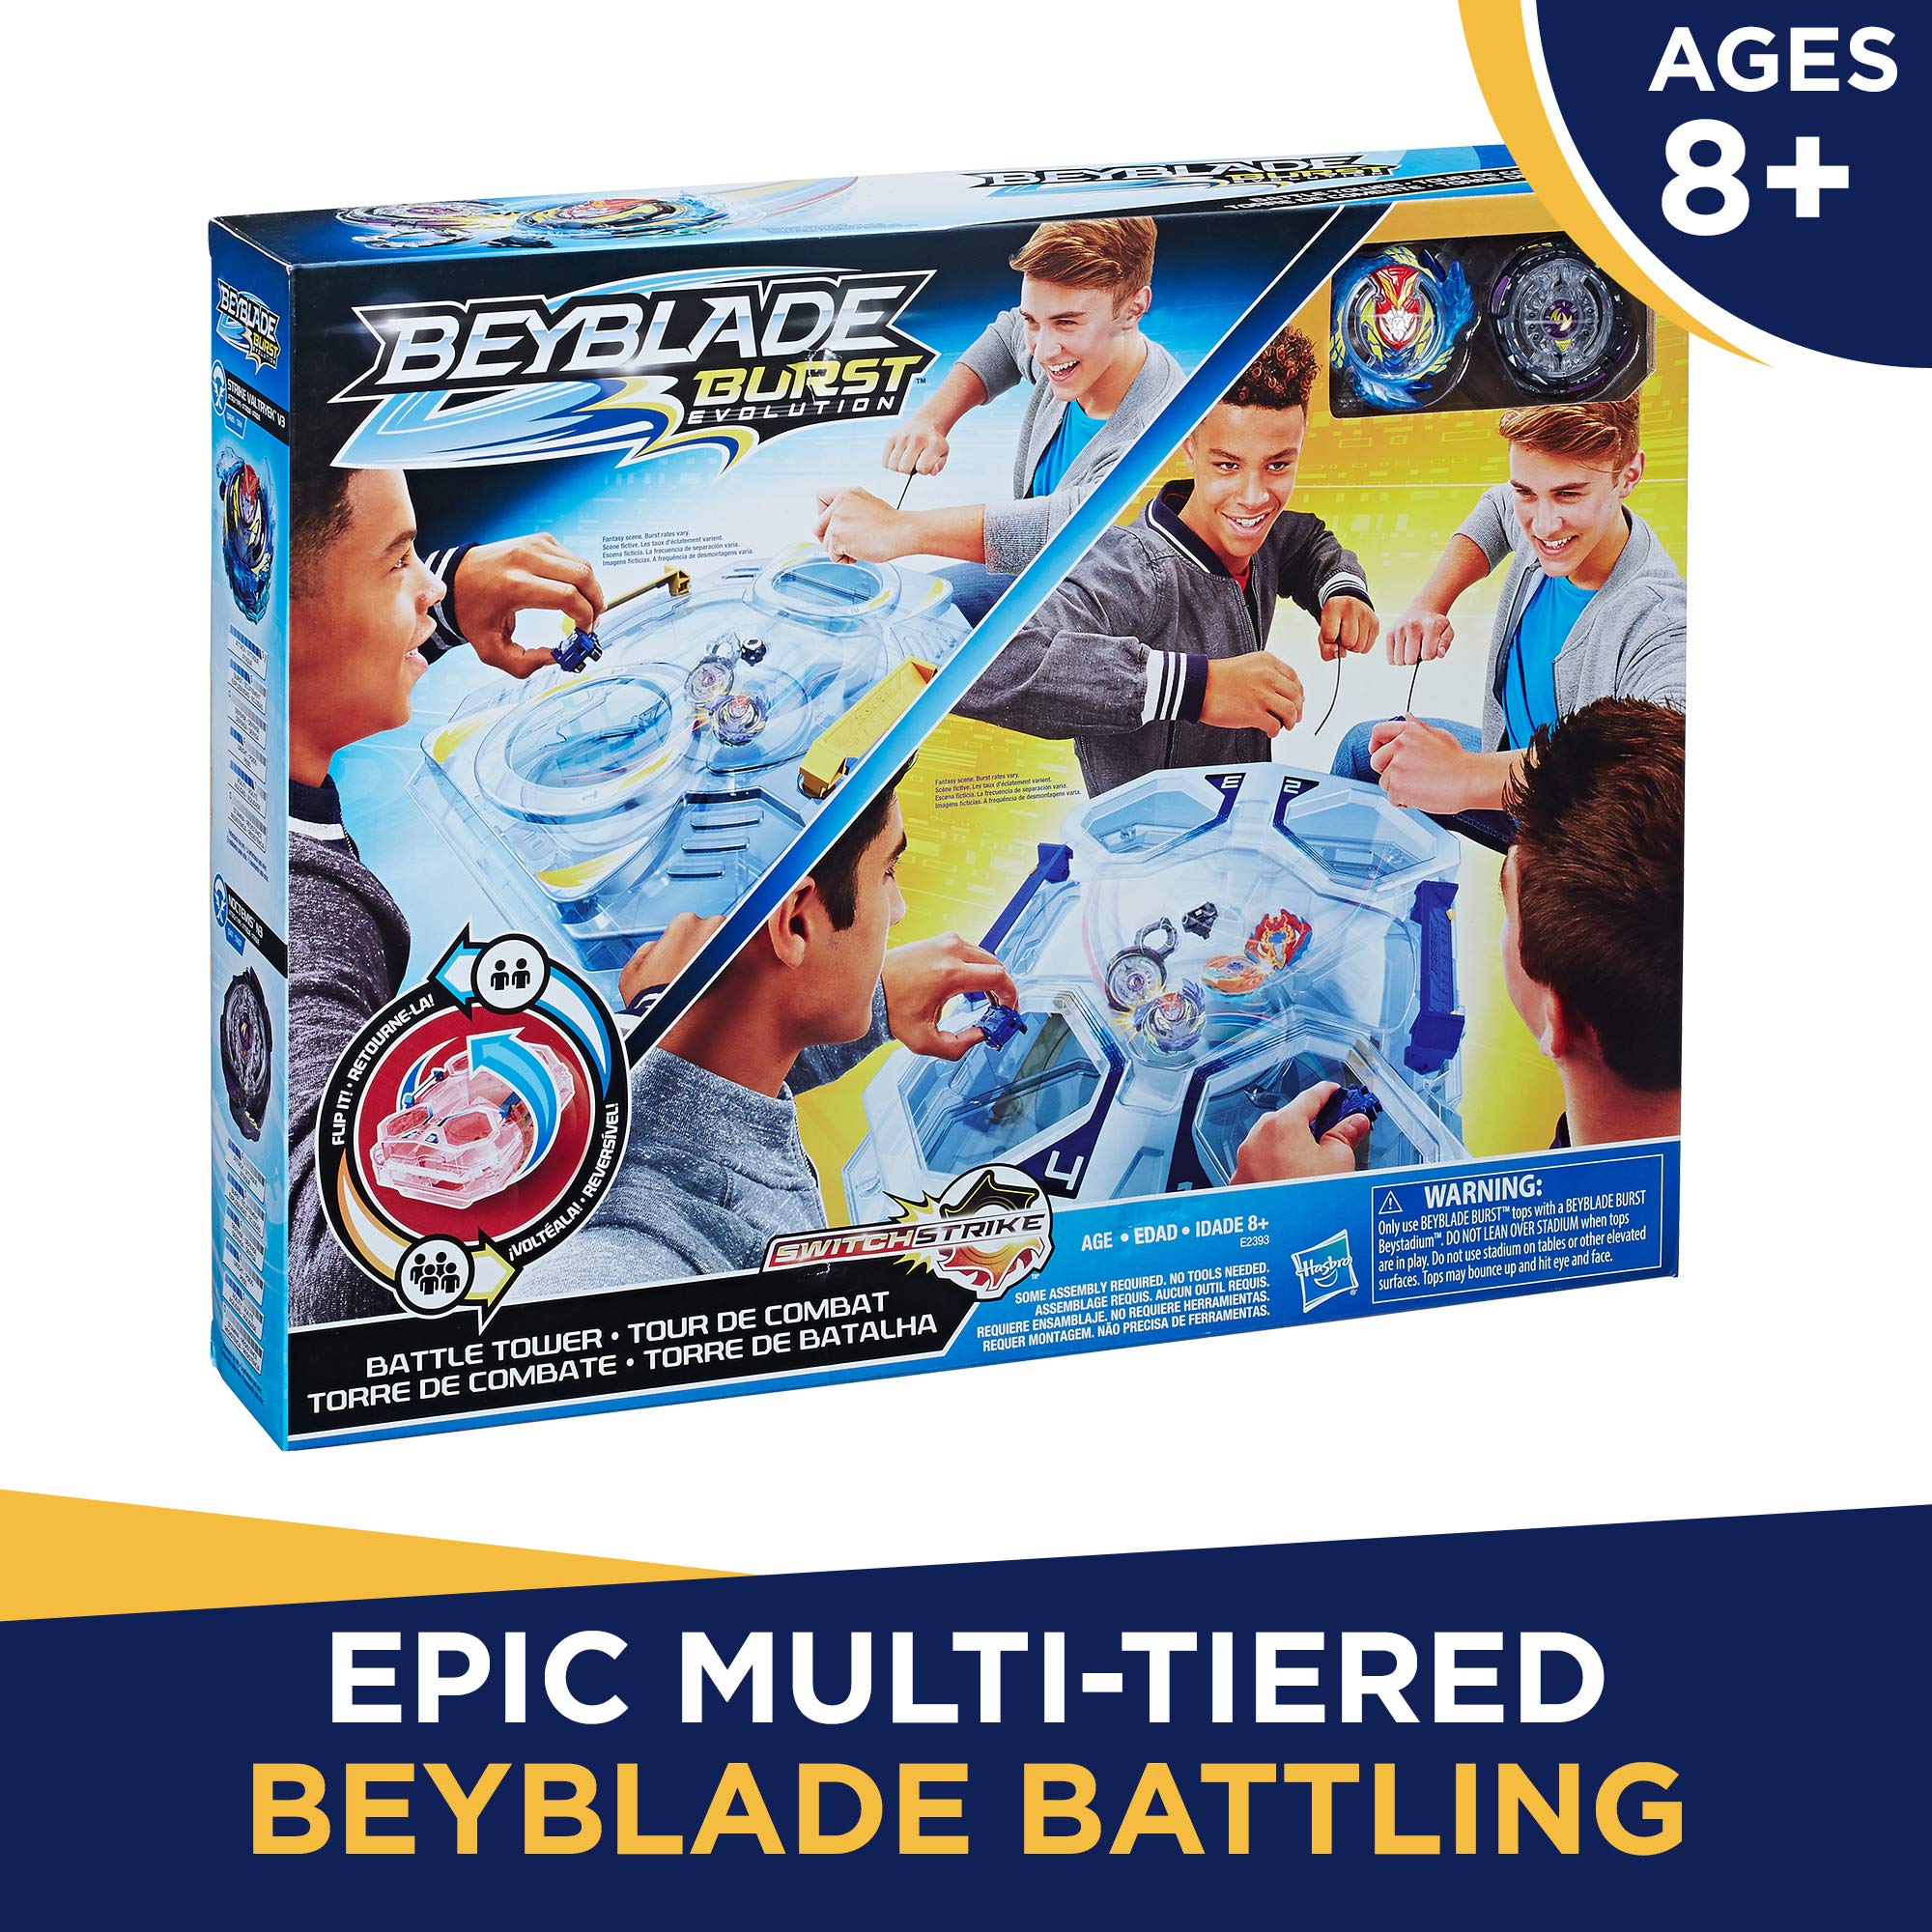 Beyblade Burst Evolution Switchstrike Battle Tower-Includes 2-Level Beystadium, Battling Tops, & Launchers-Age 8+, Multicolor